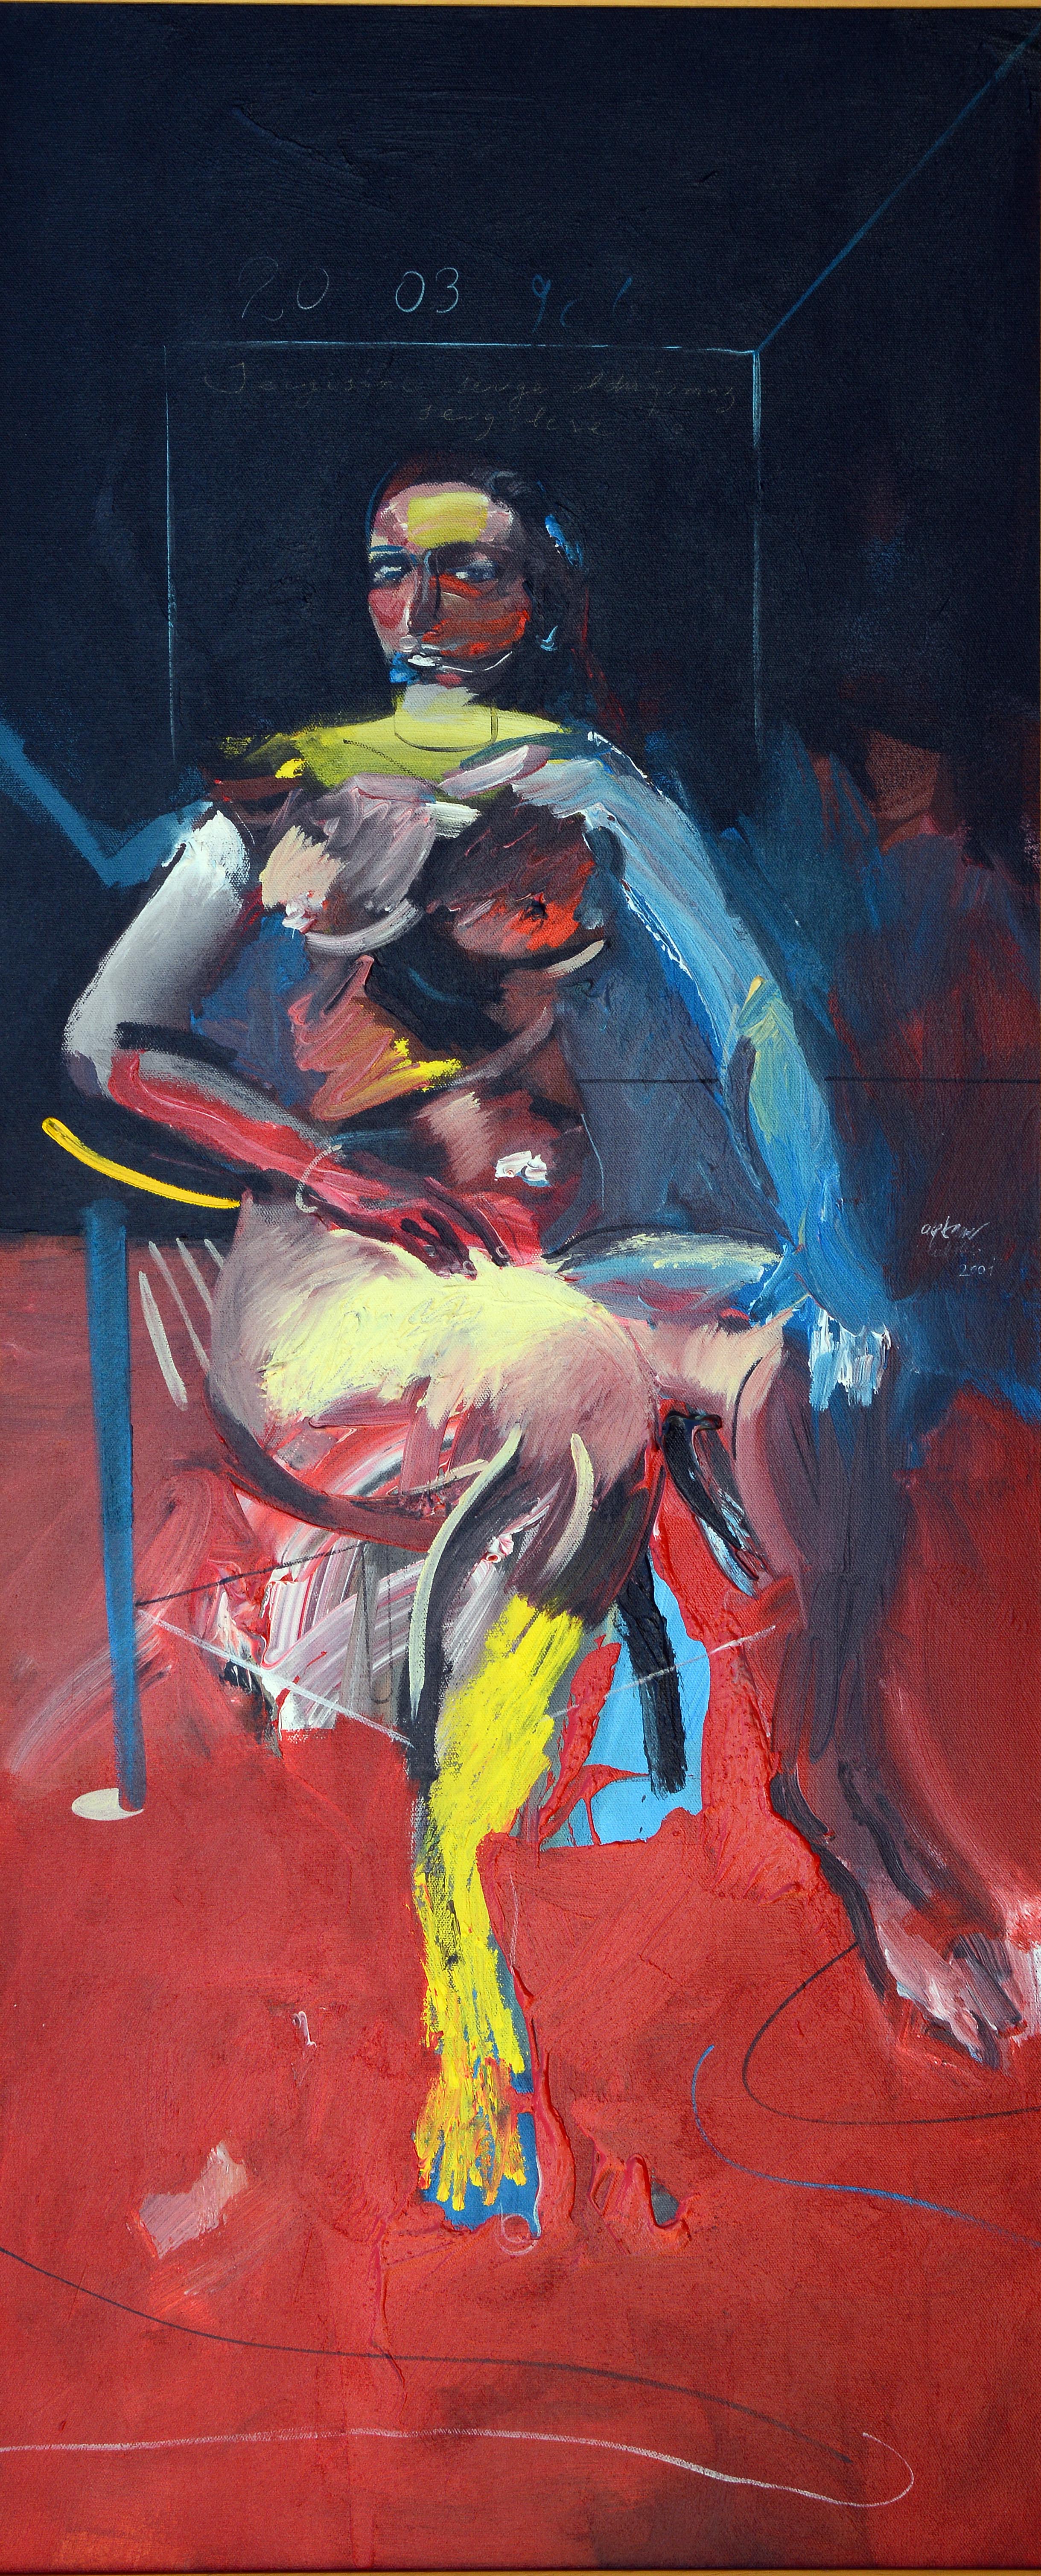 İsimsiz- Untitled, 2003, Tuval üzerine yağlıboya- Oil on canvas, 140X55 cm